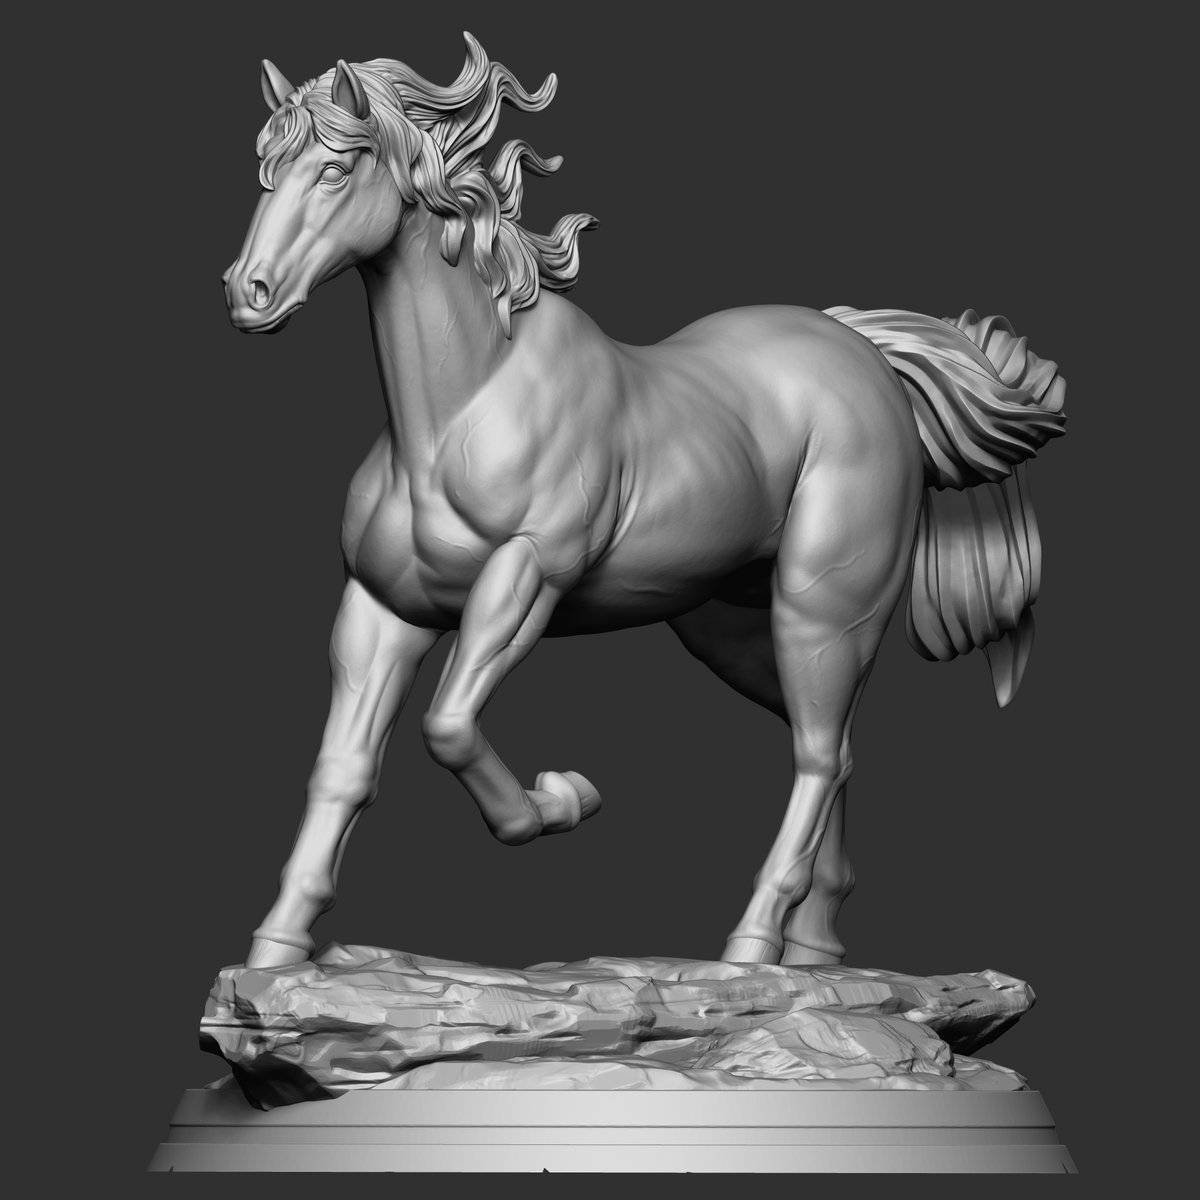 Horse by @YDSTUDIO15 #3DPrinting #Cults3D cults3d.com/:1279251 via @cults3d 
#3dprint #horse #horse3dprint